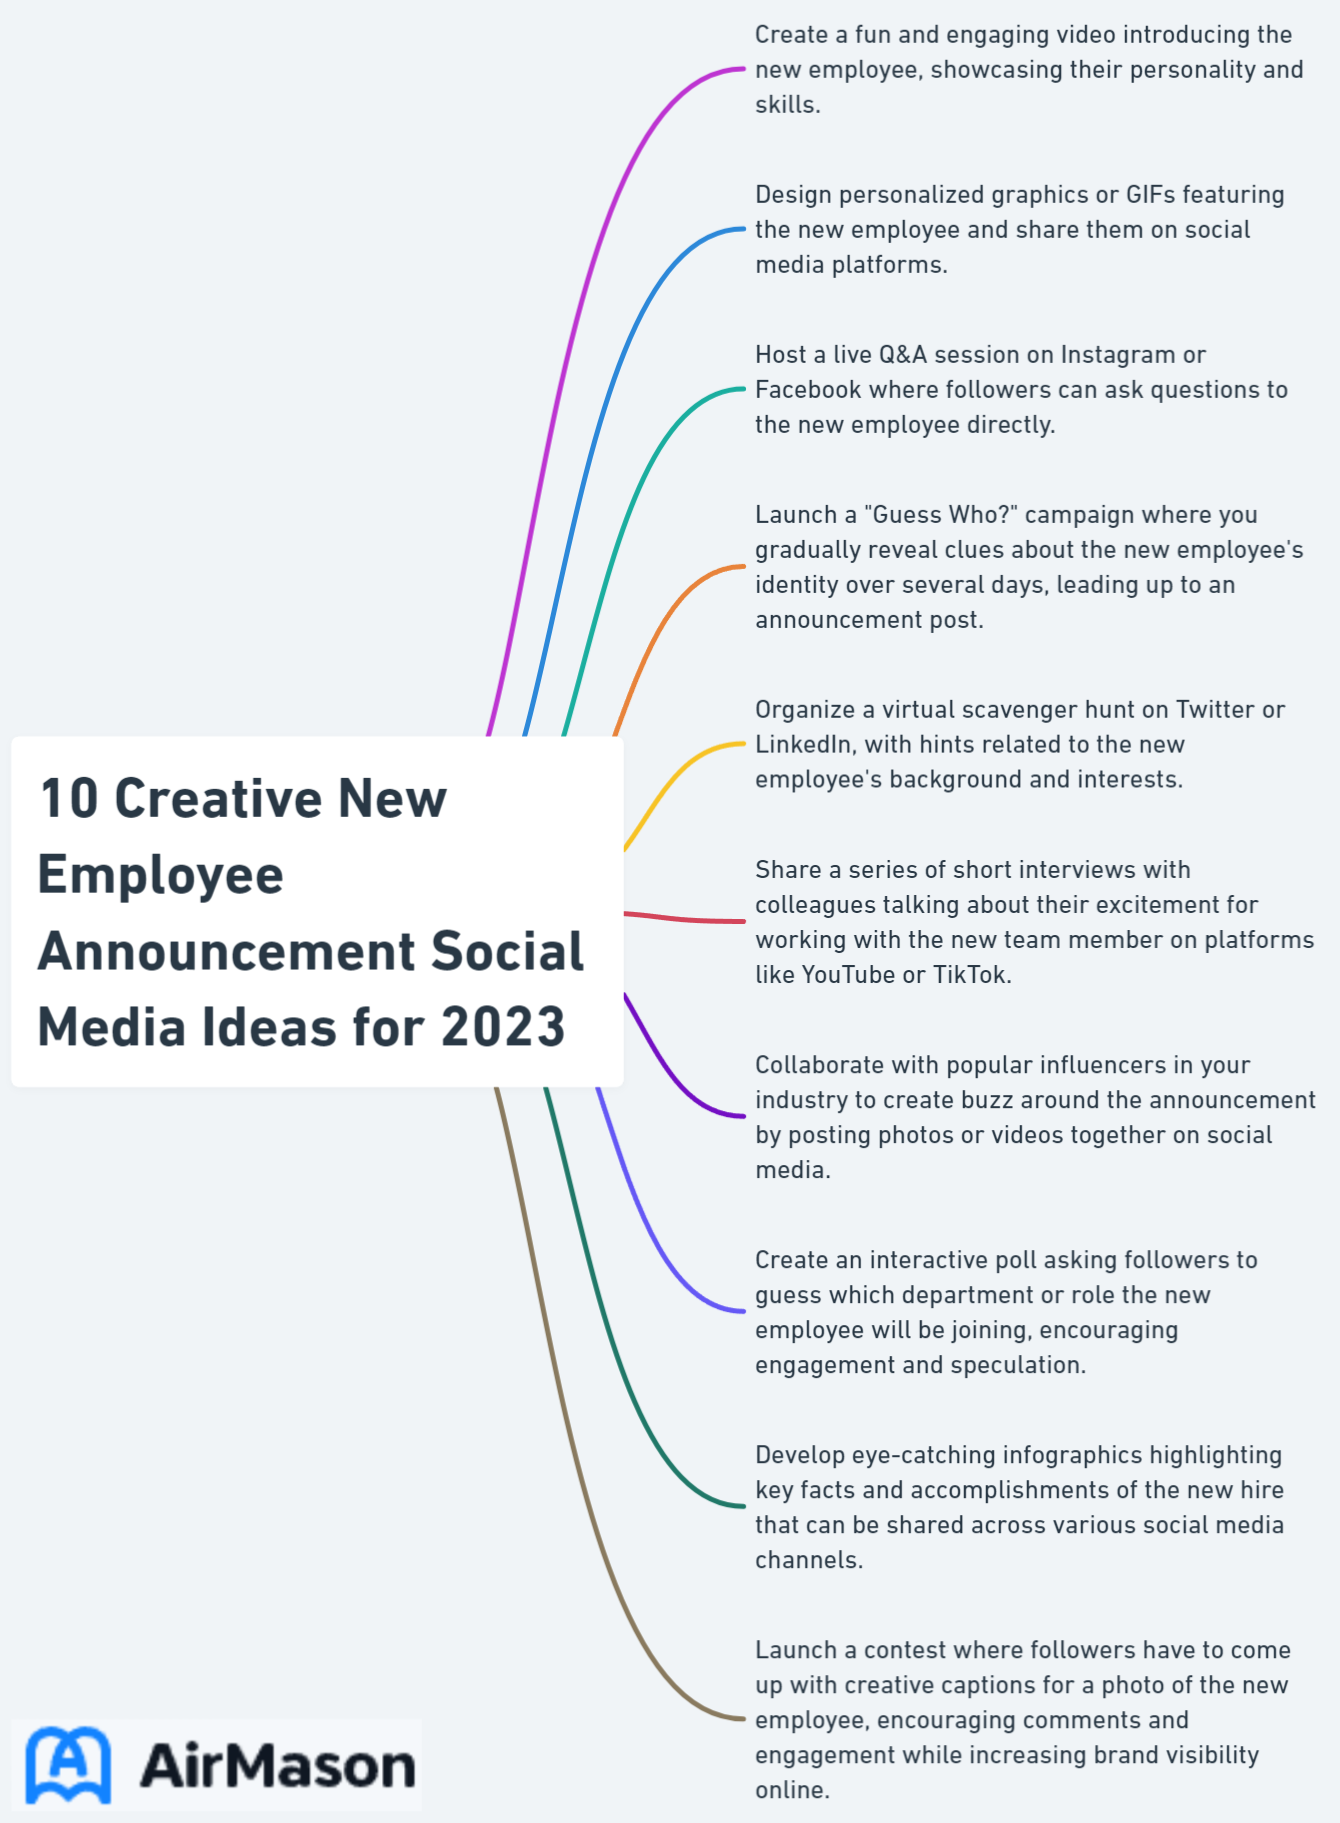 10 Creative New Employee Announcement Social Media Ideas for 2023